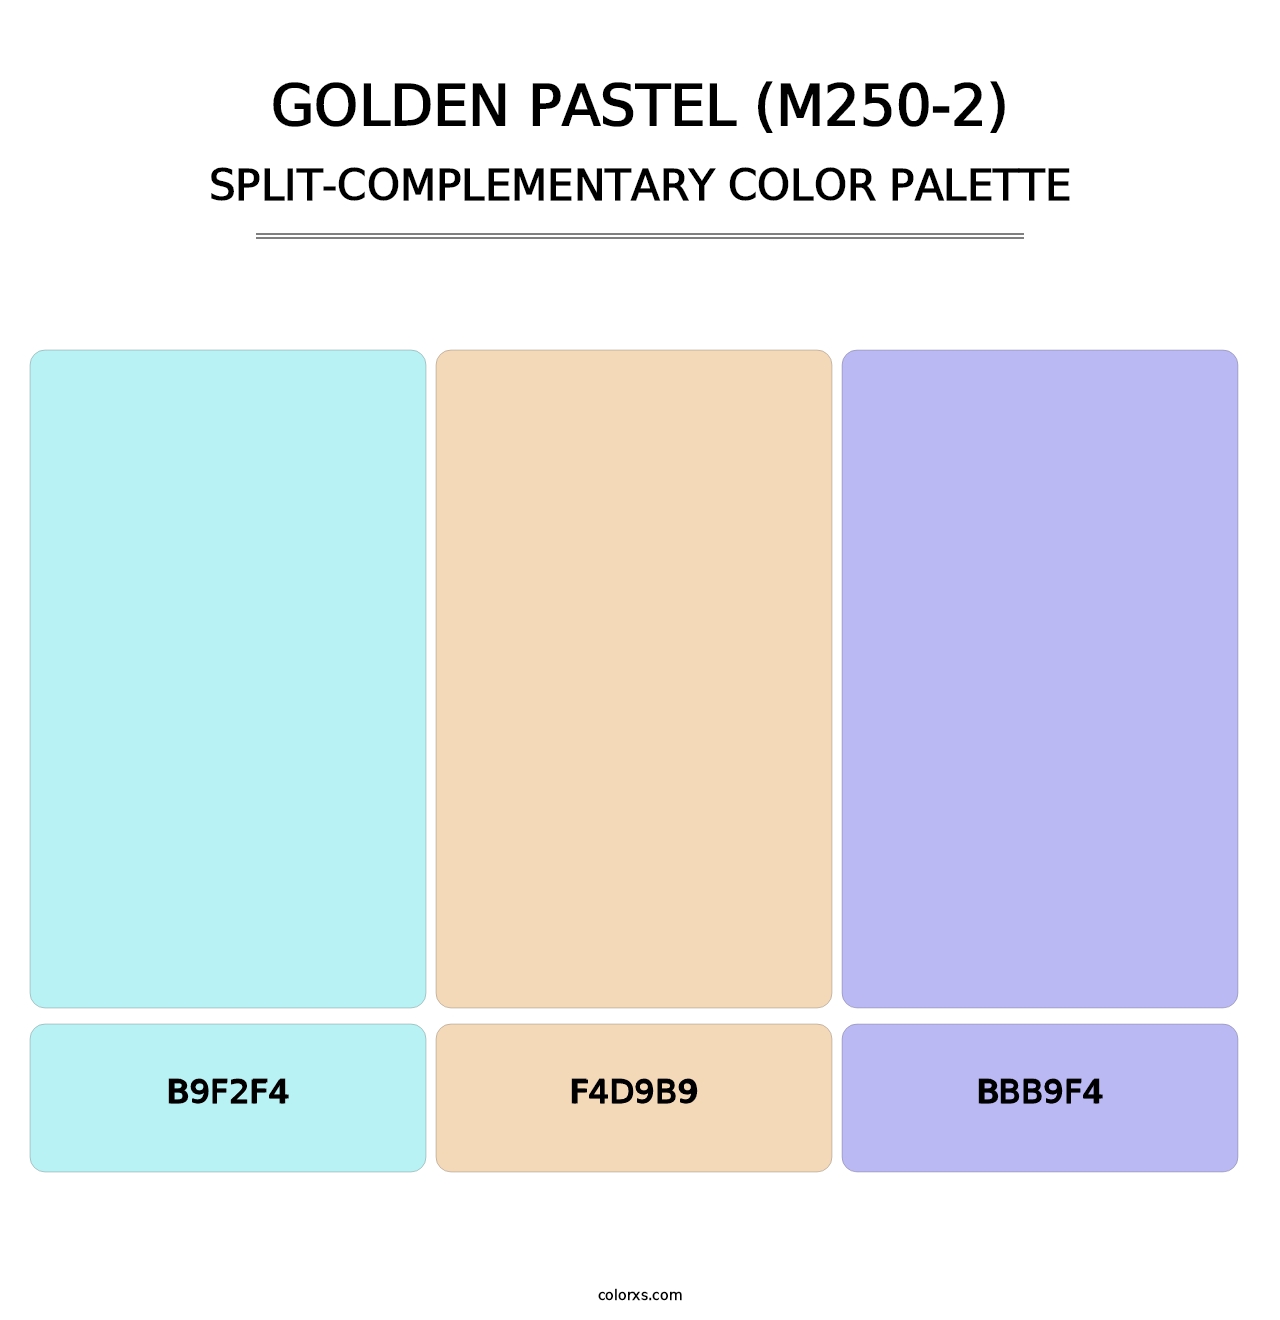 Golden Pastel (M250-2) - Split-Complementary Color Palette